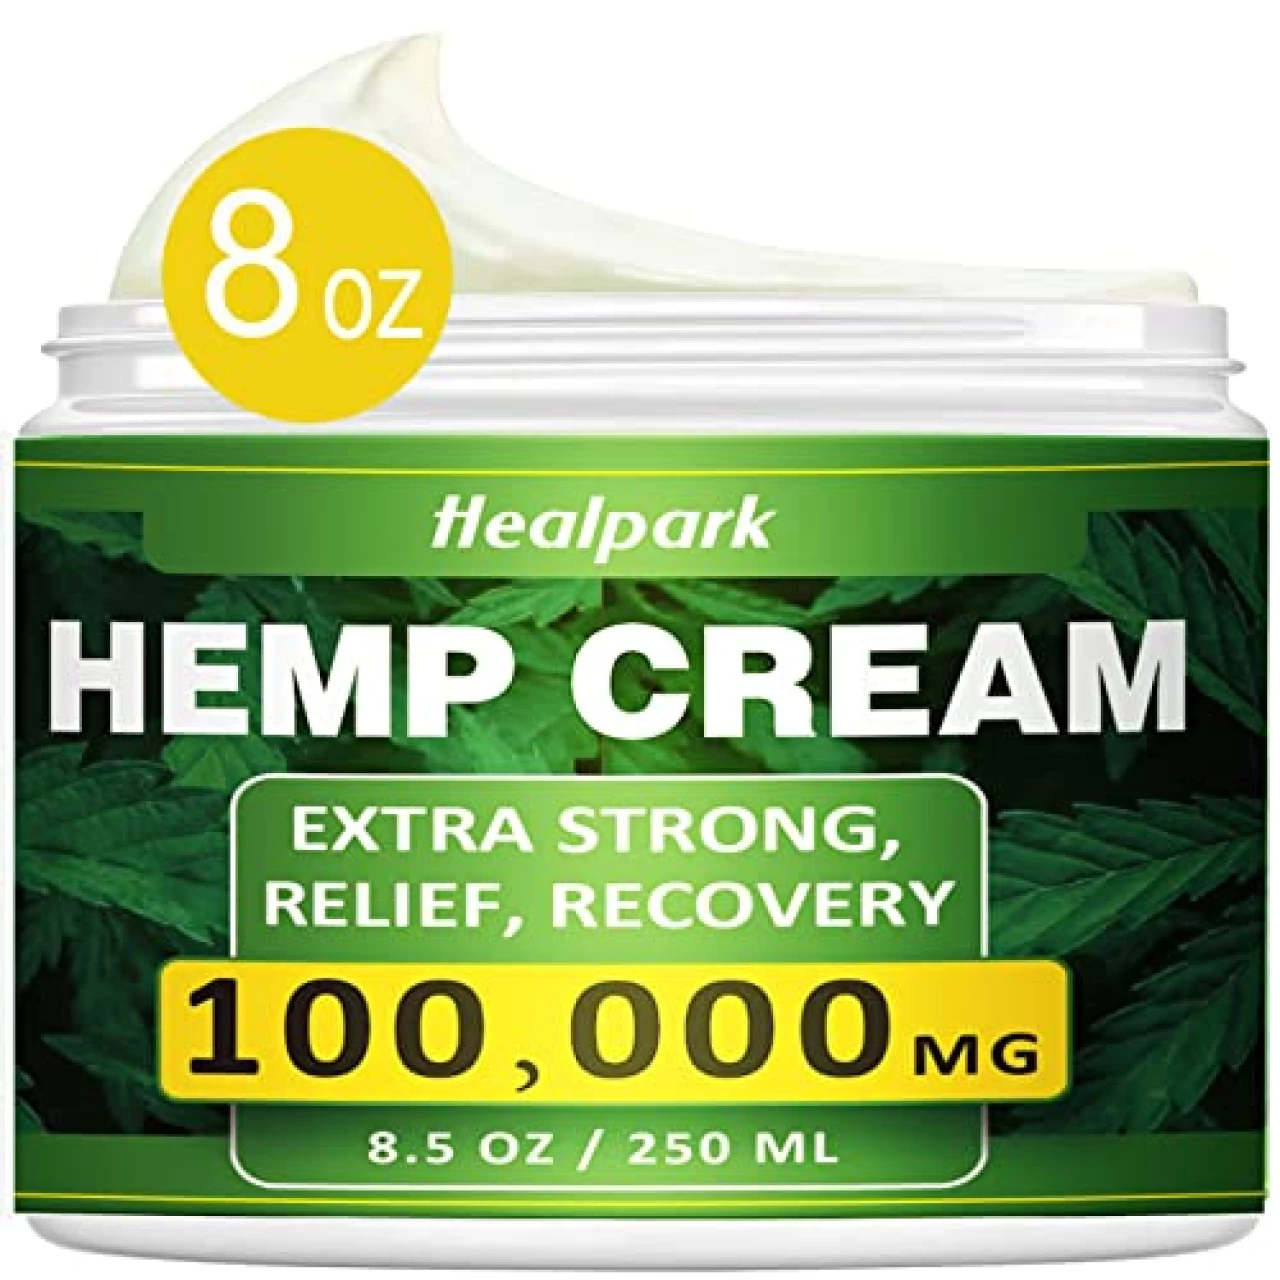 Natural Hemp Cream for Muscles, Joints, Lower Back, Back, Knees, Neck, Fingers, Elbows- 8.5 fl oz - Arnica,MSM, Turmeric, Emu Oil, Menthol, Aloe